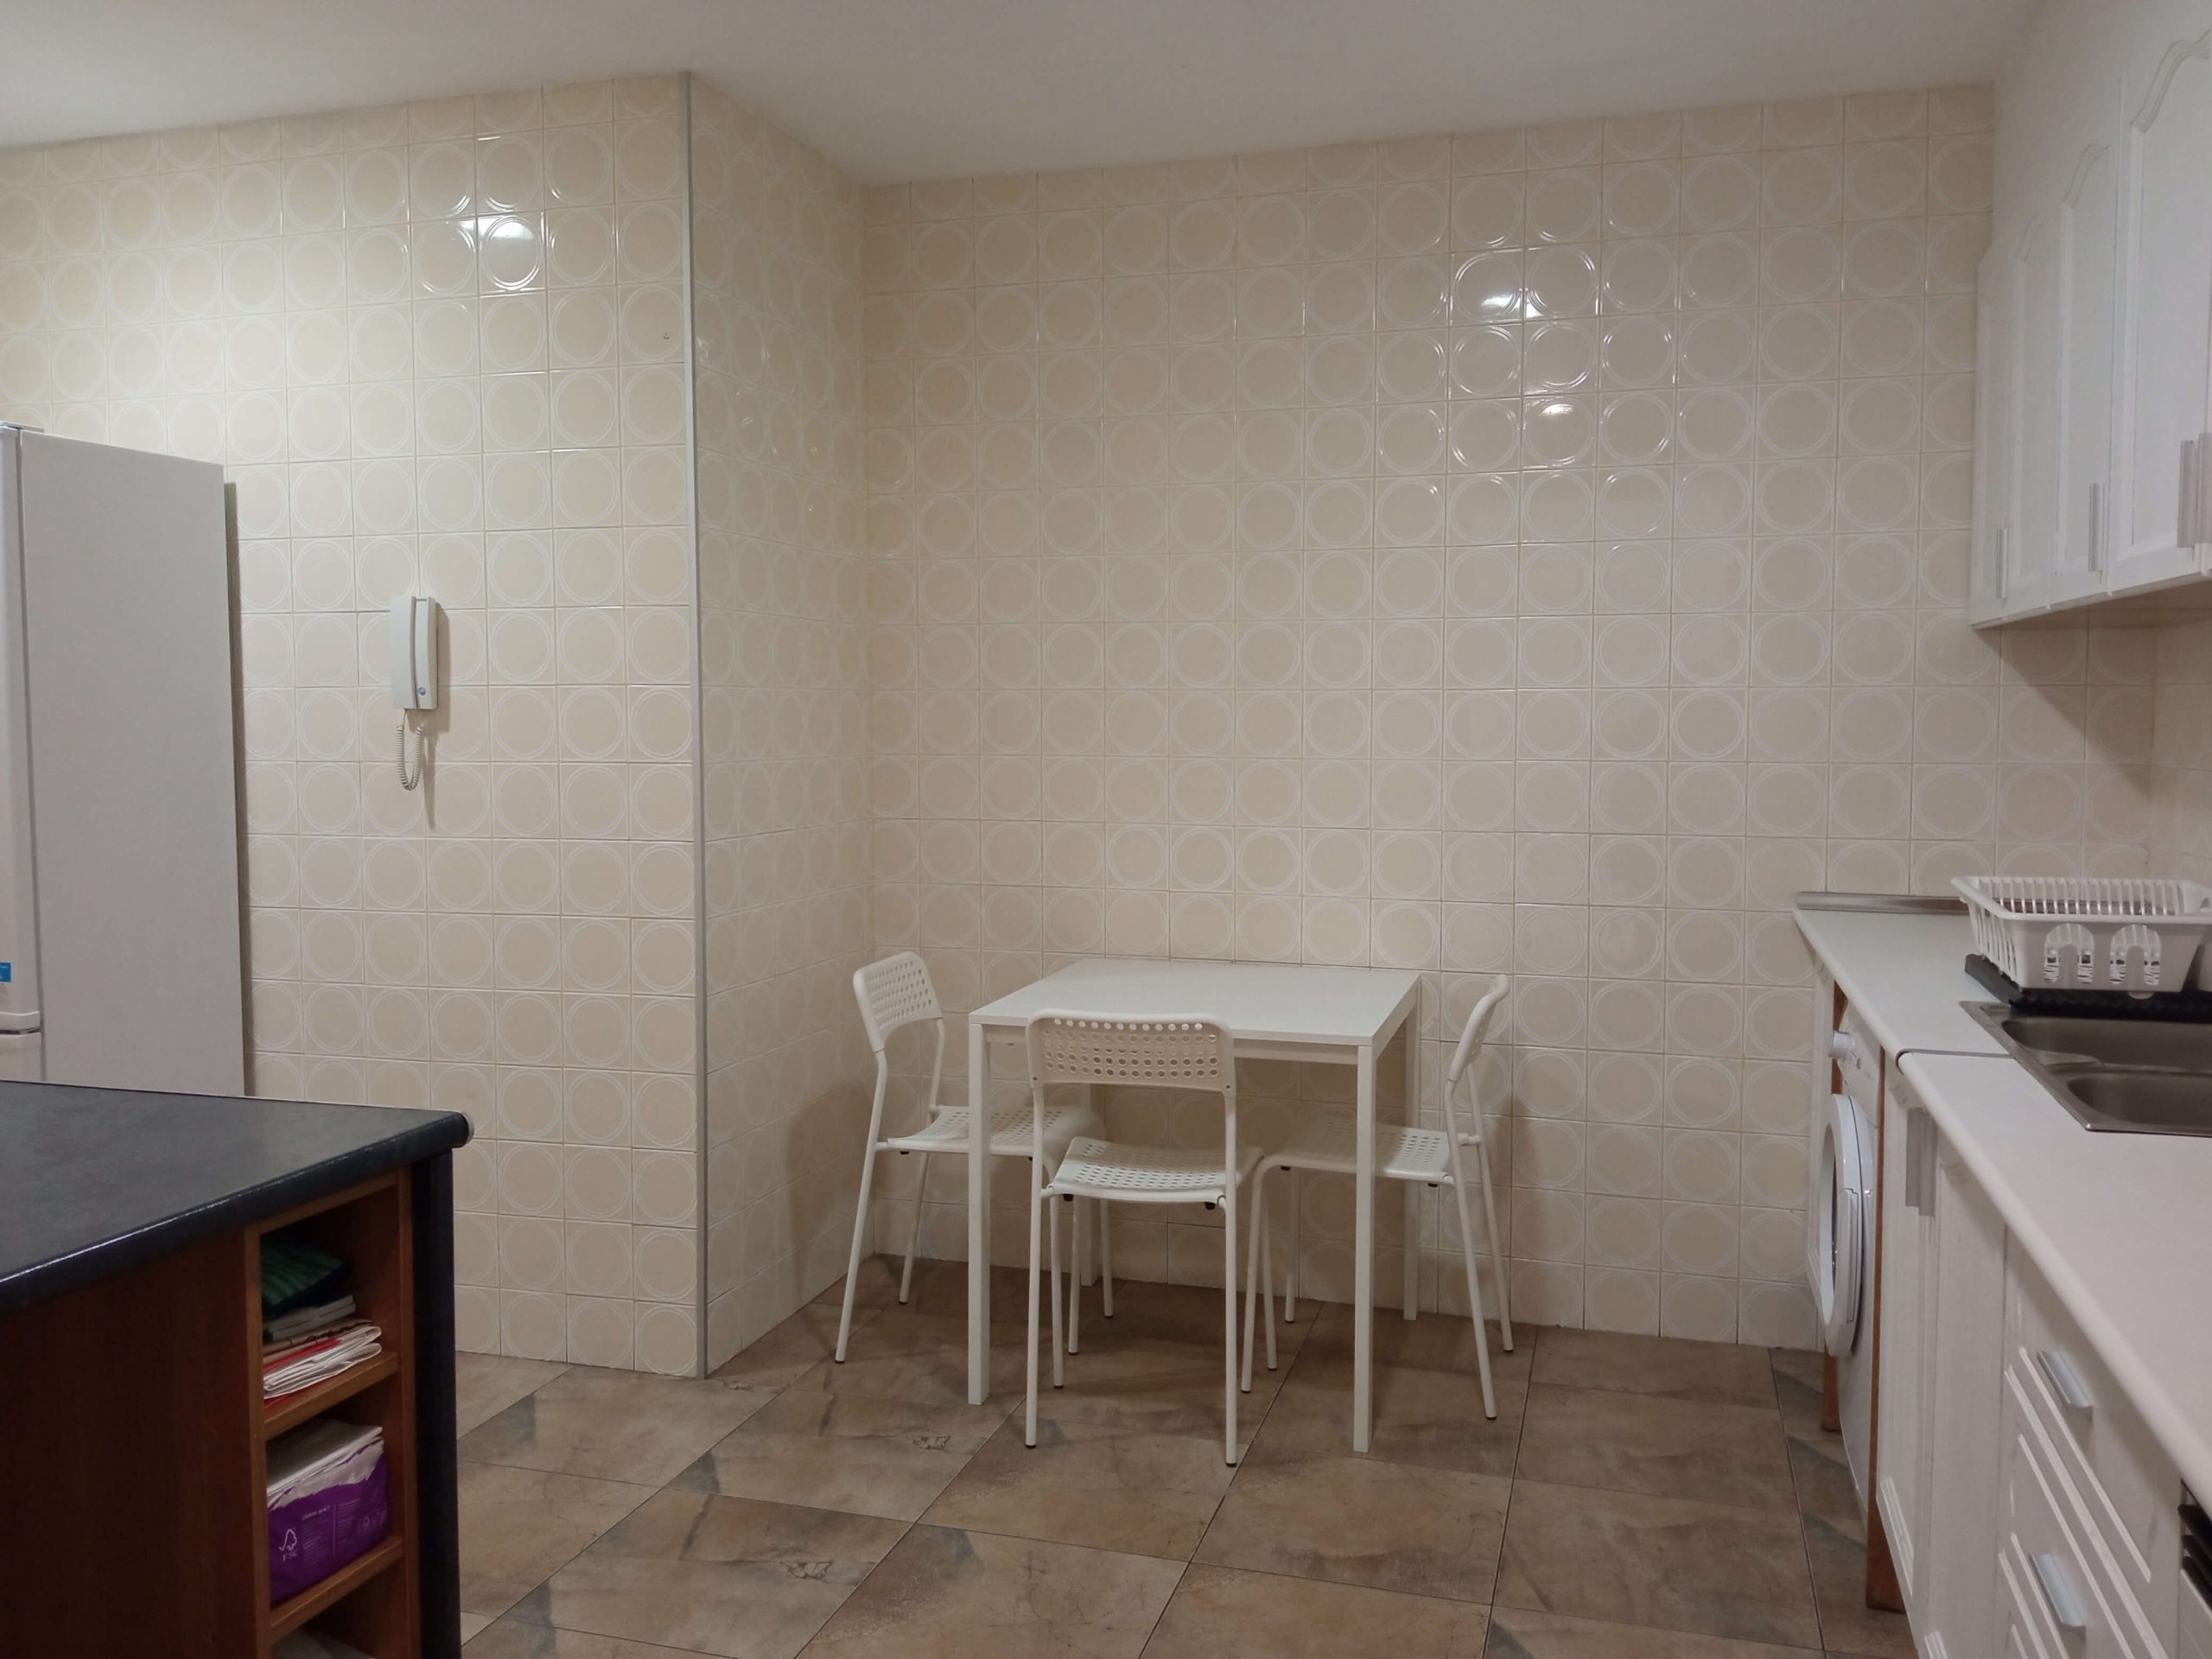 Kitchen apartment for rent in valencia, guillen